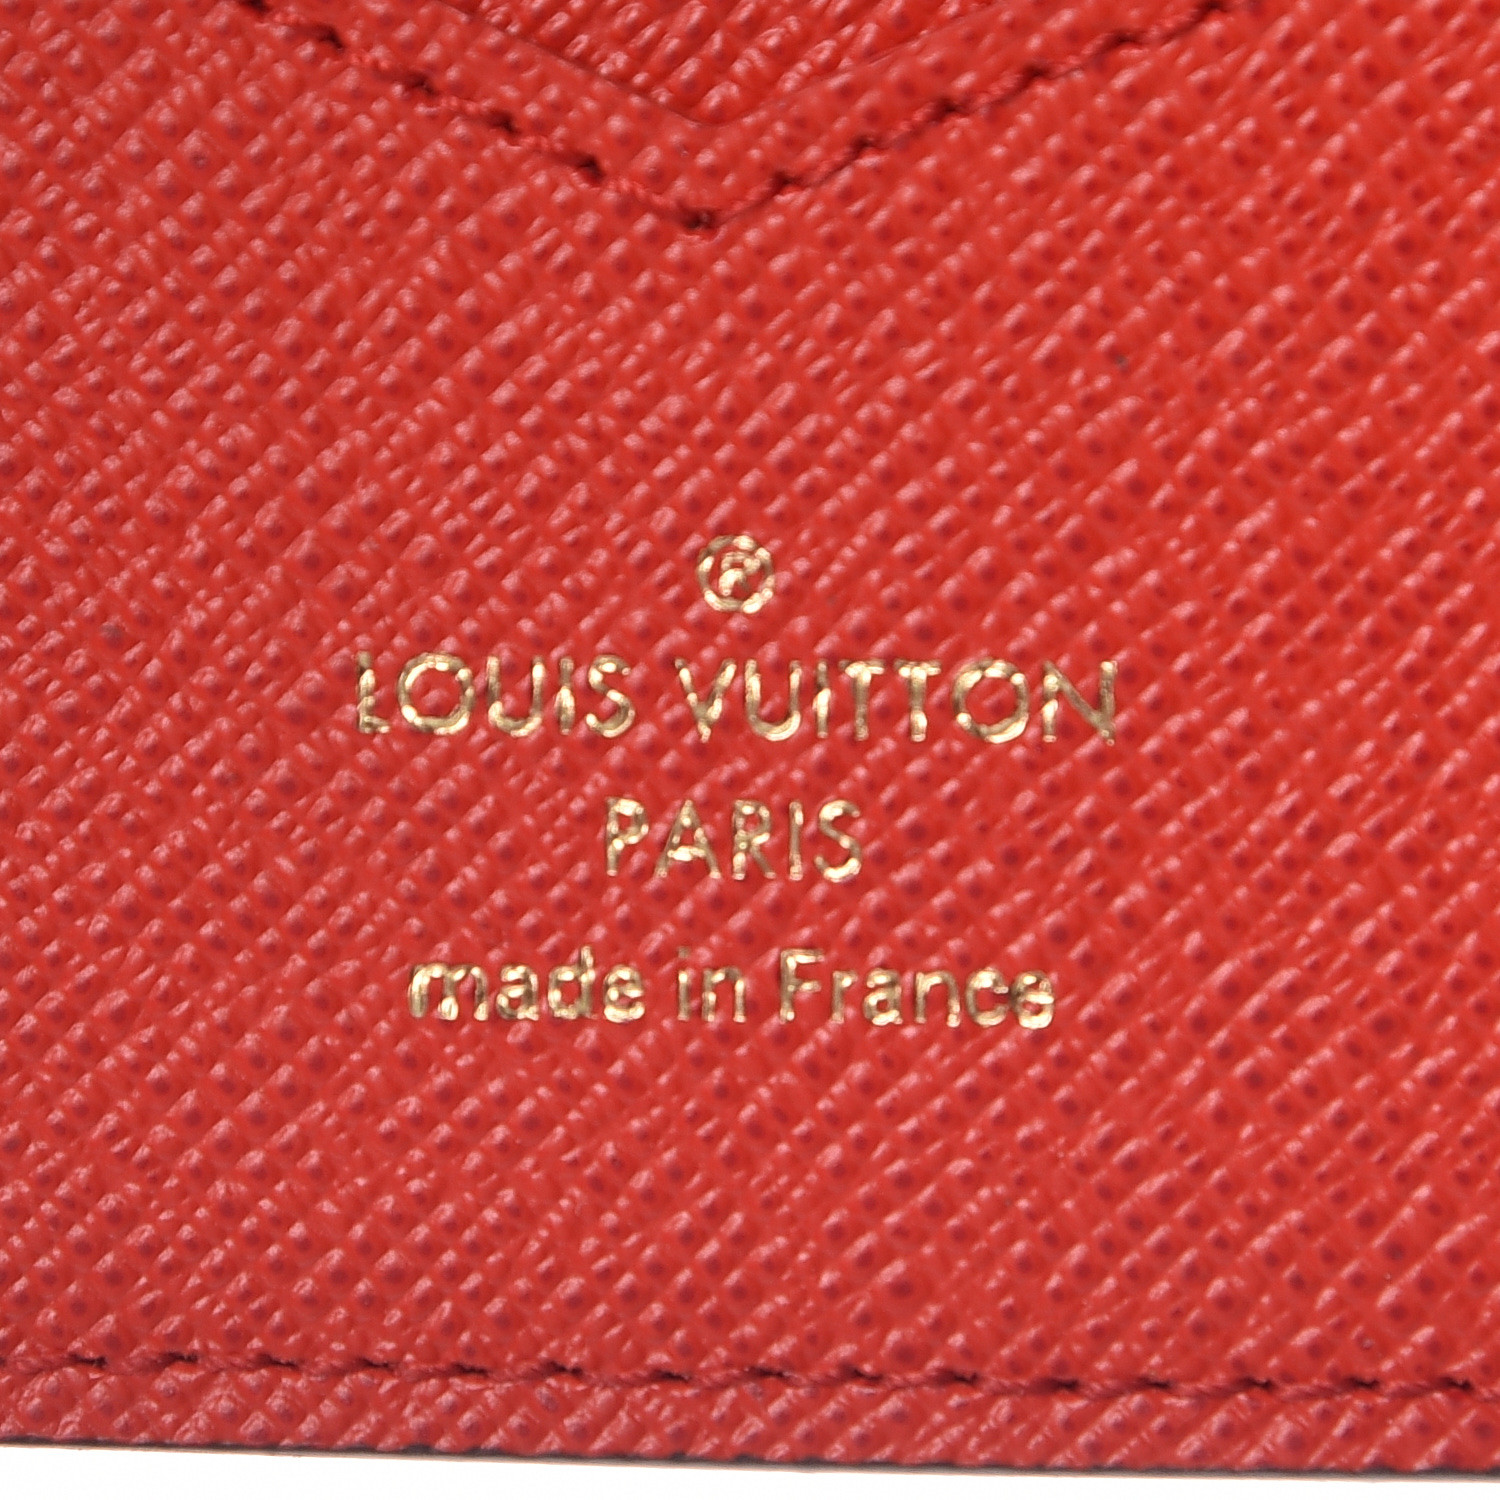 LOUIS VUITTON Monogram 2019 Christmas Animation Passport Cover Rouge 484074